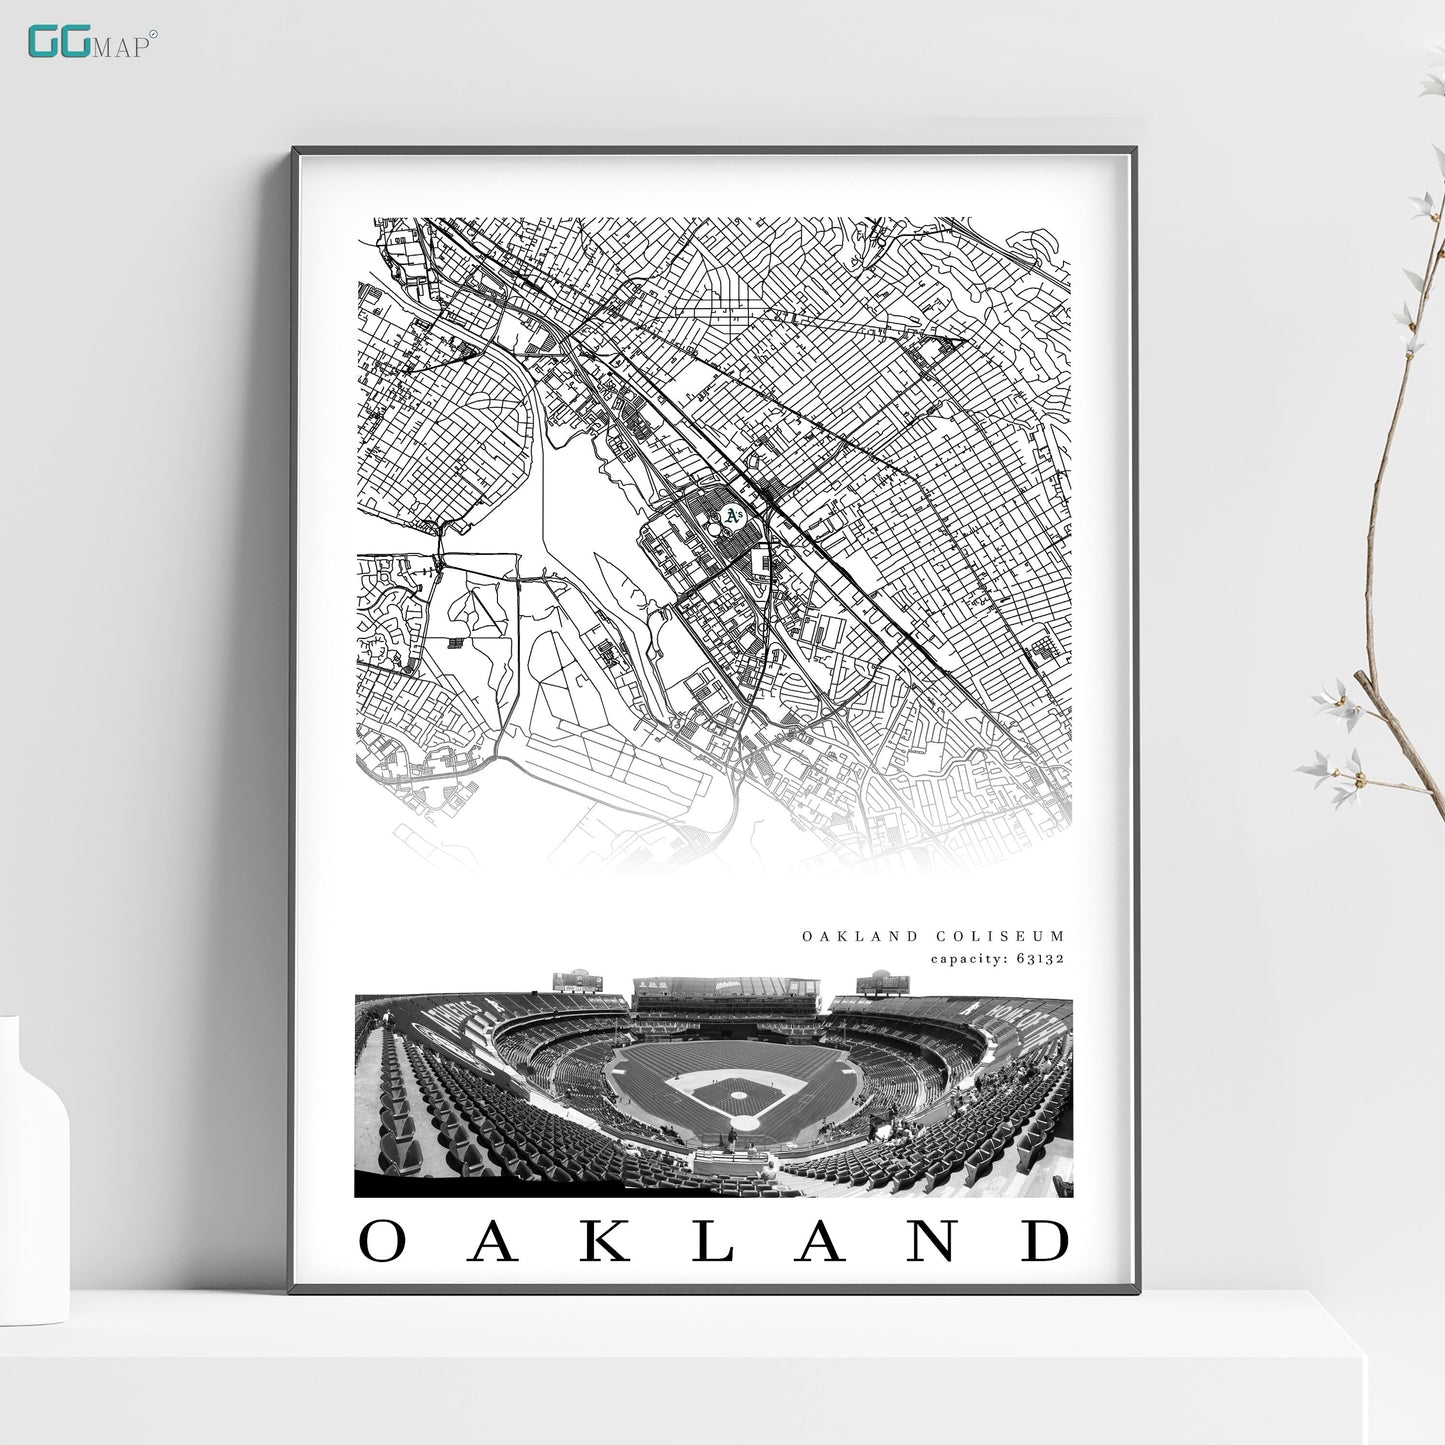 City map of OAKLAND - Home Decor Oakland - Oakland Coliseum wall decor - Oakland poster - Oakland Athletics - Print map